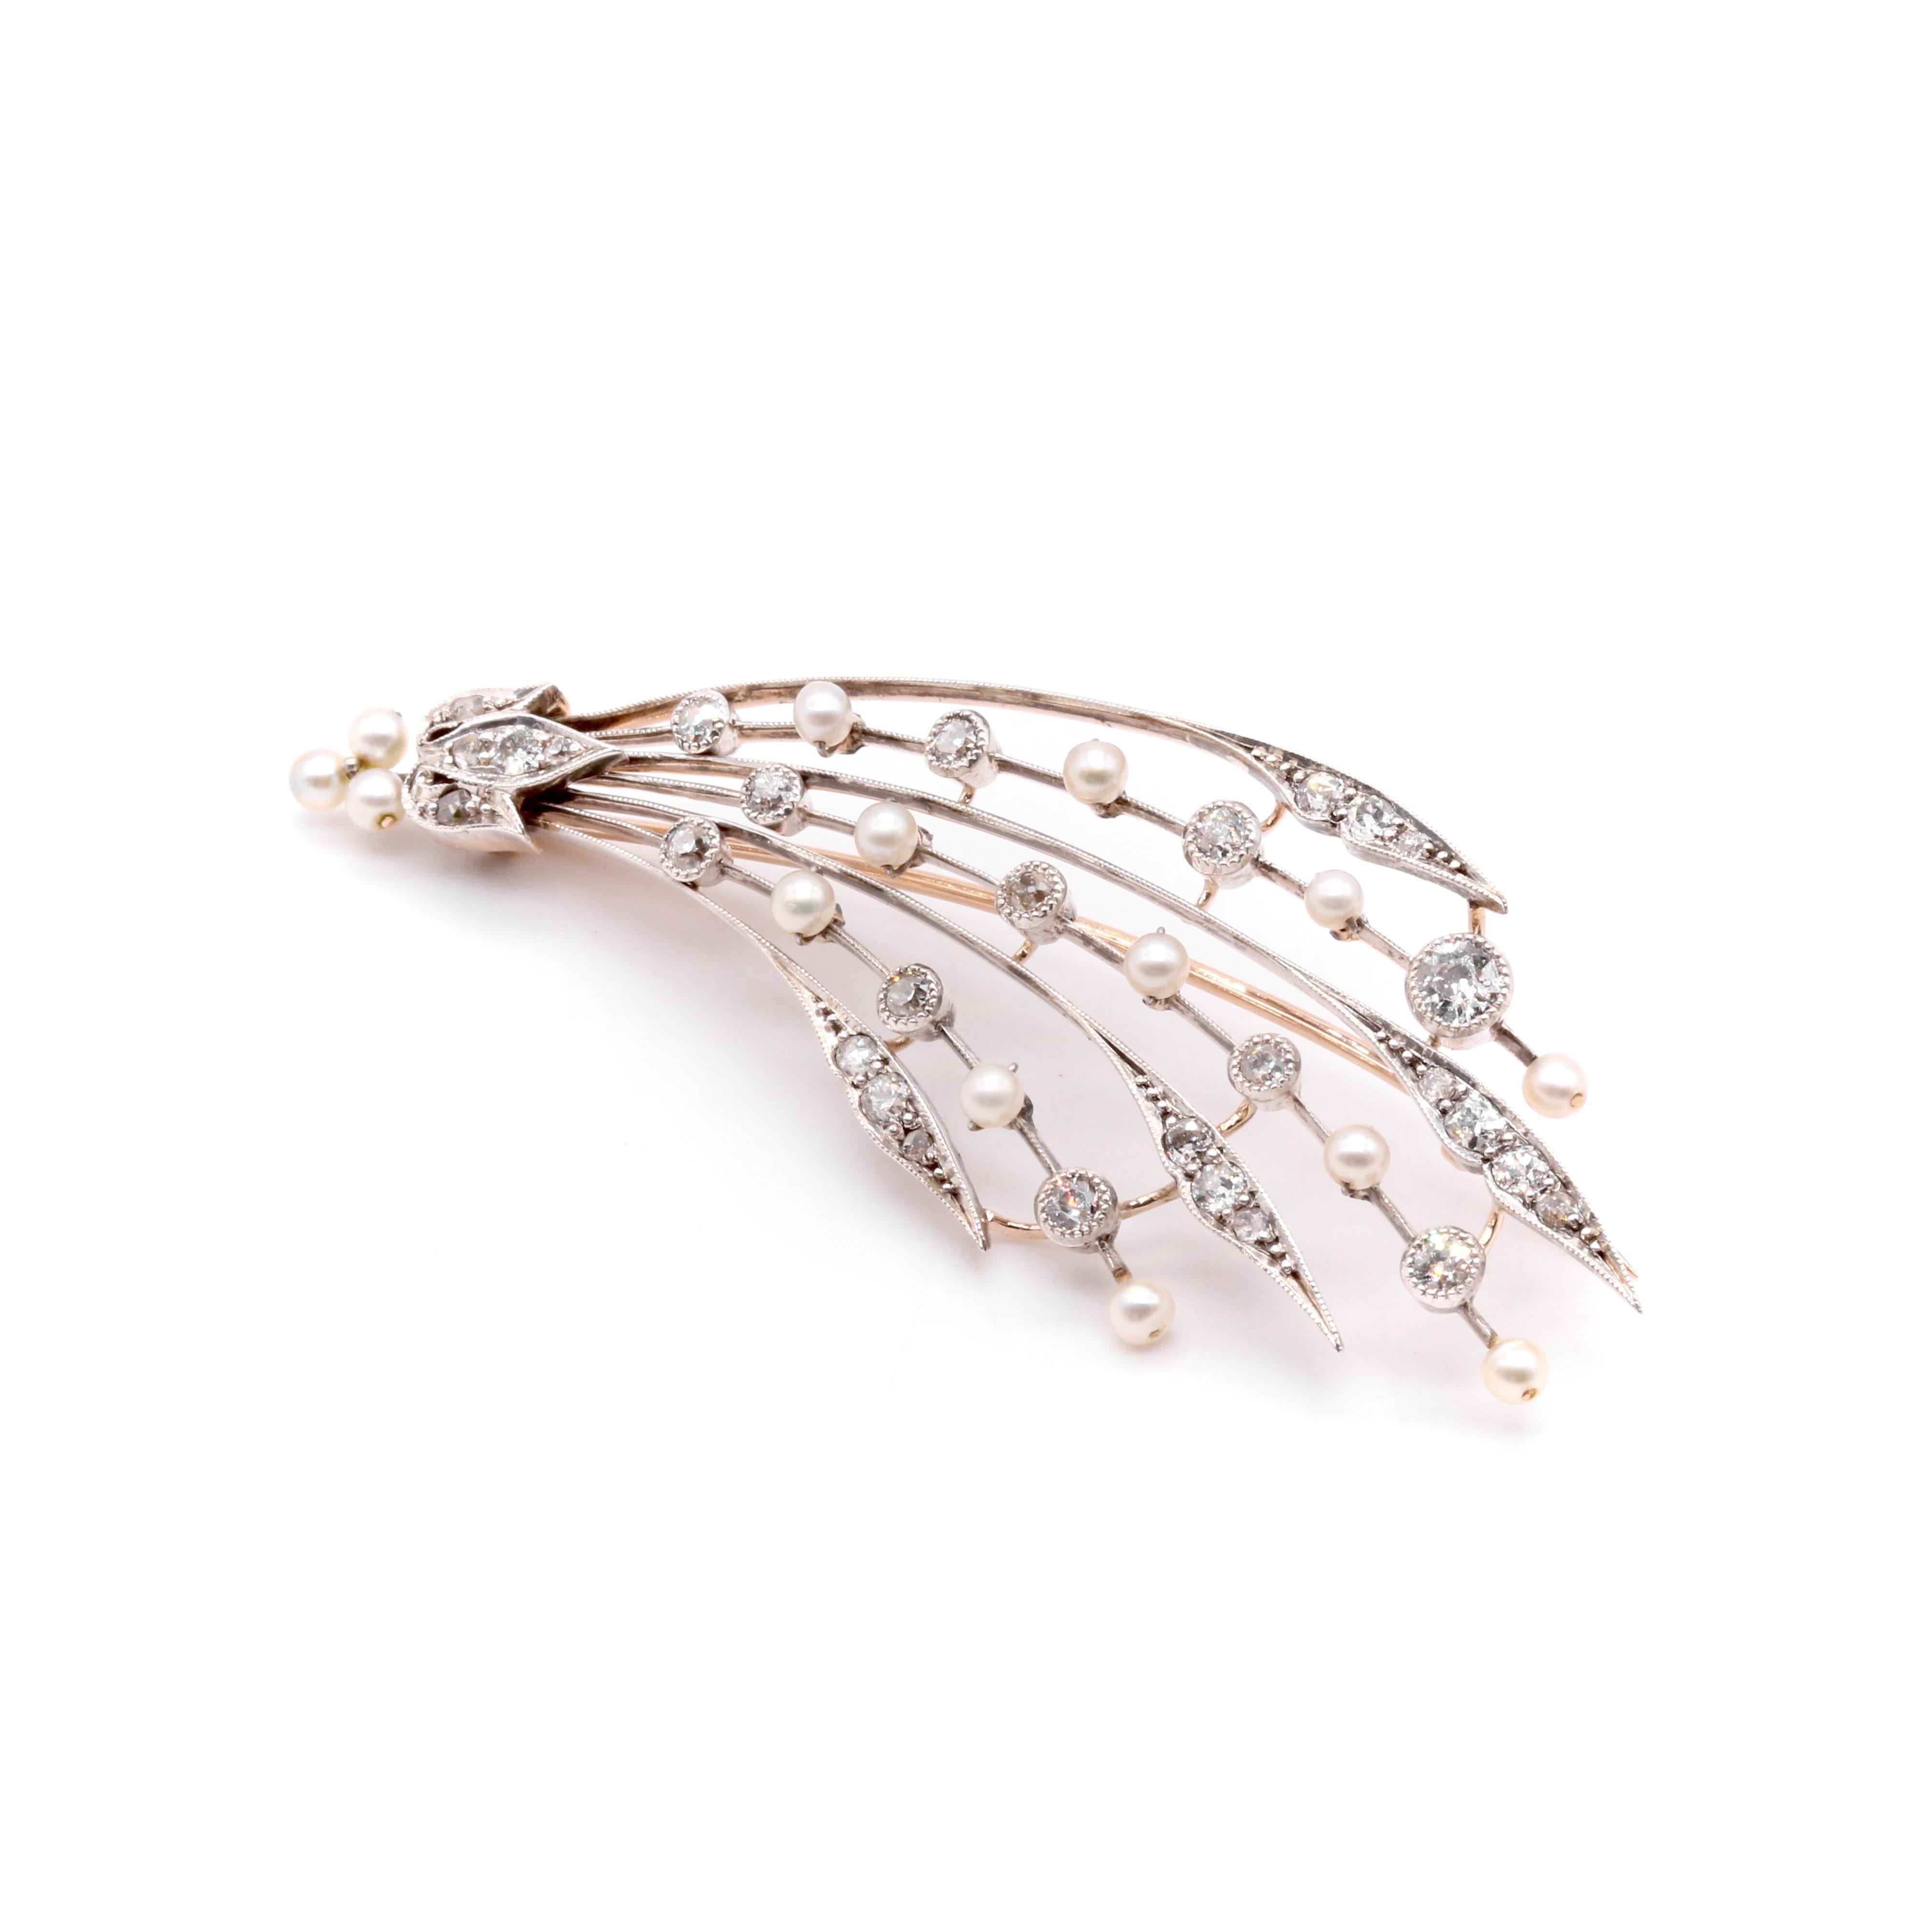 Women's or Men's Antique Edwardian 15K Gold & Silver 1.72ctw Diamond Pearl Halley’s Comet Brooch For Sale